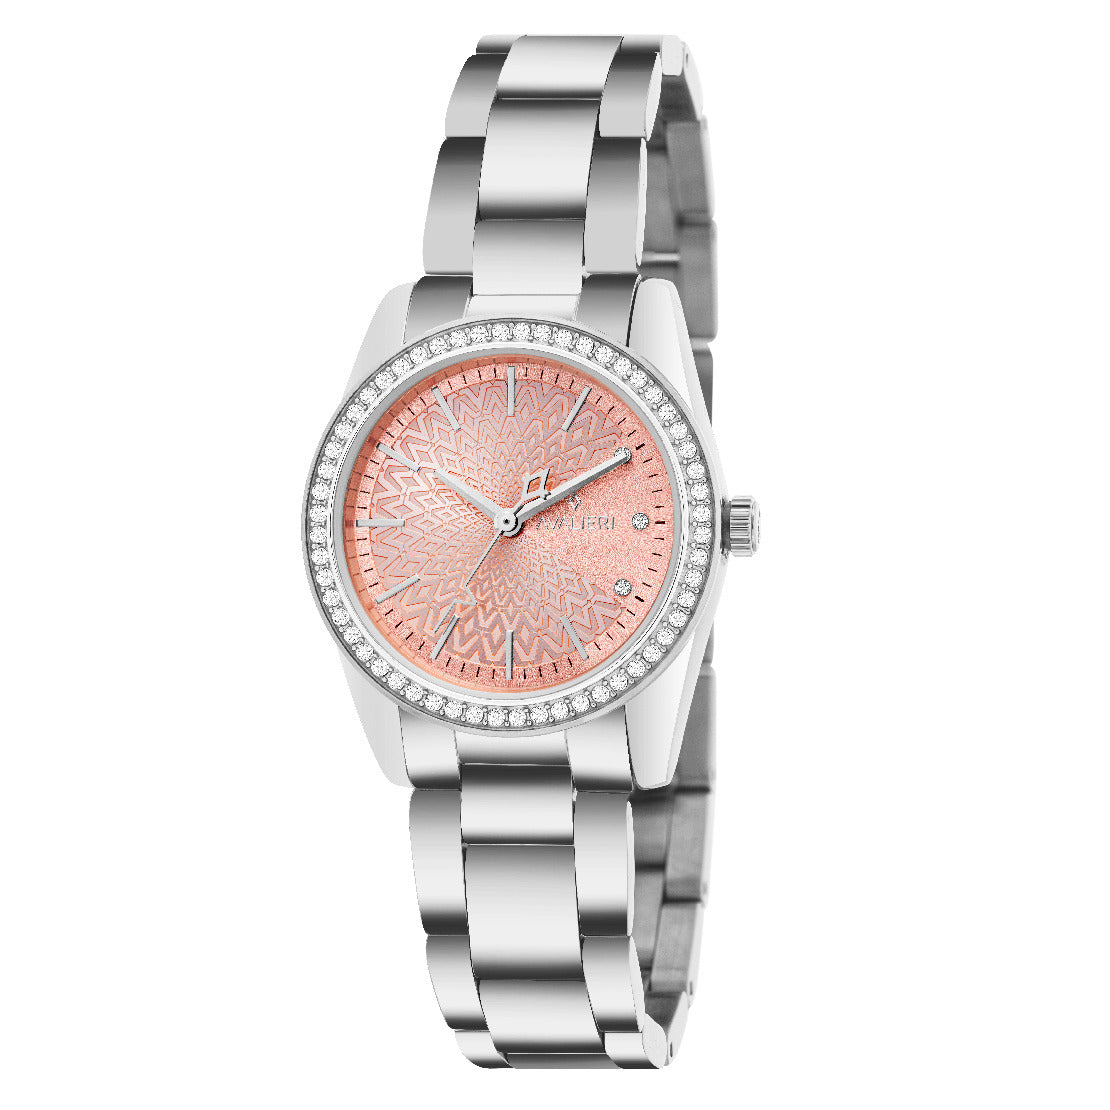 Avalieri Women's Quartz Watch Pink Dial - AV-2484B